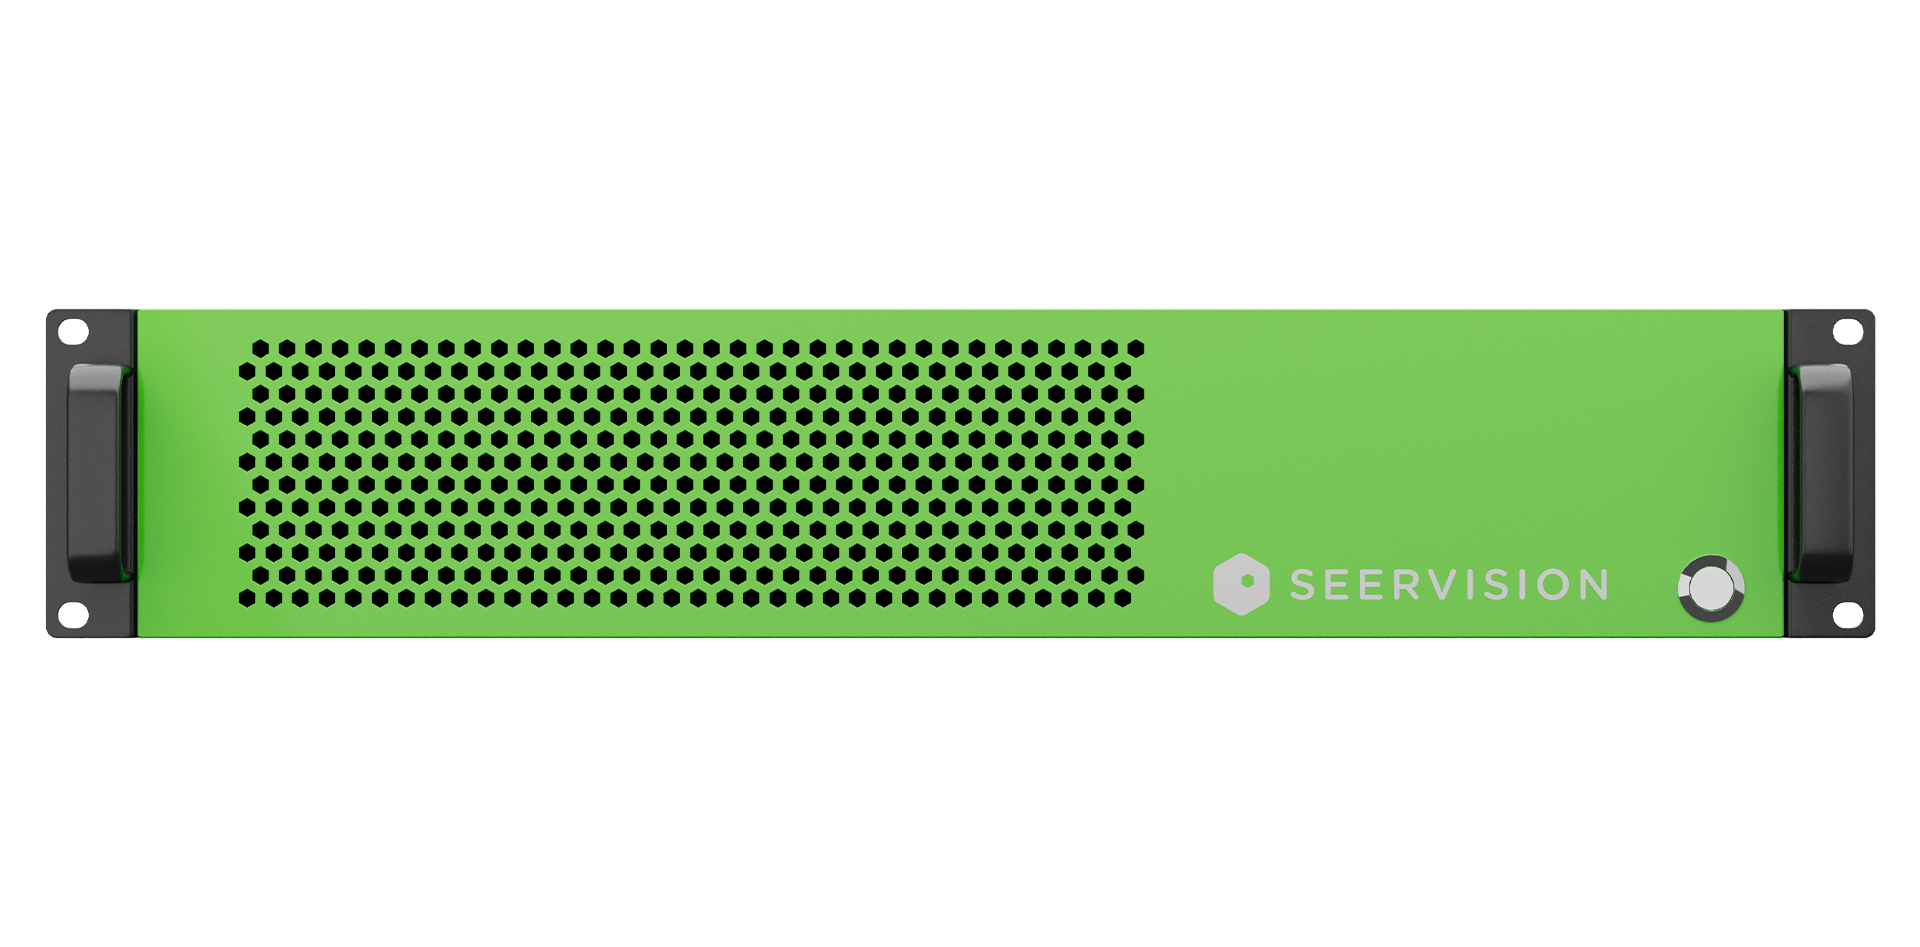 Abbildung des Seervision Servers